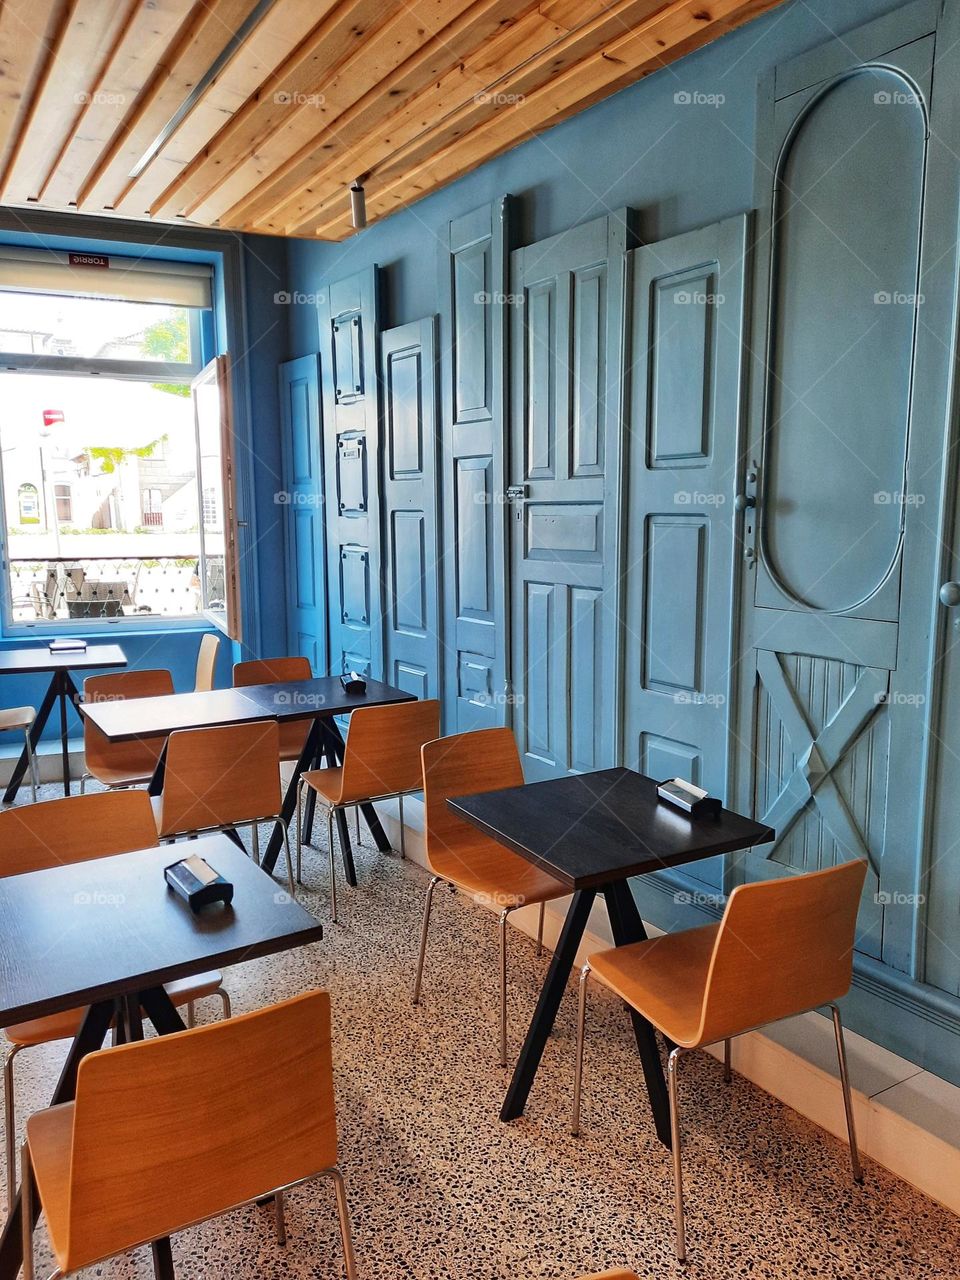 The stylish secrets of café interiors